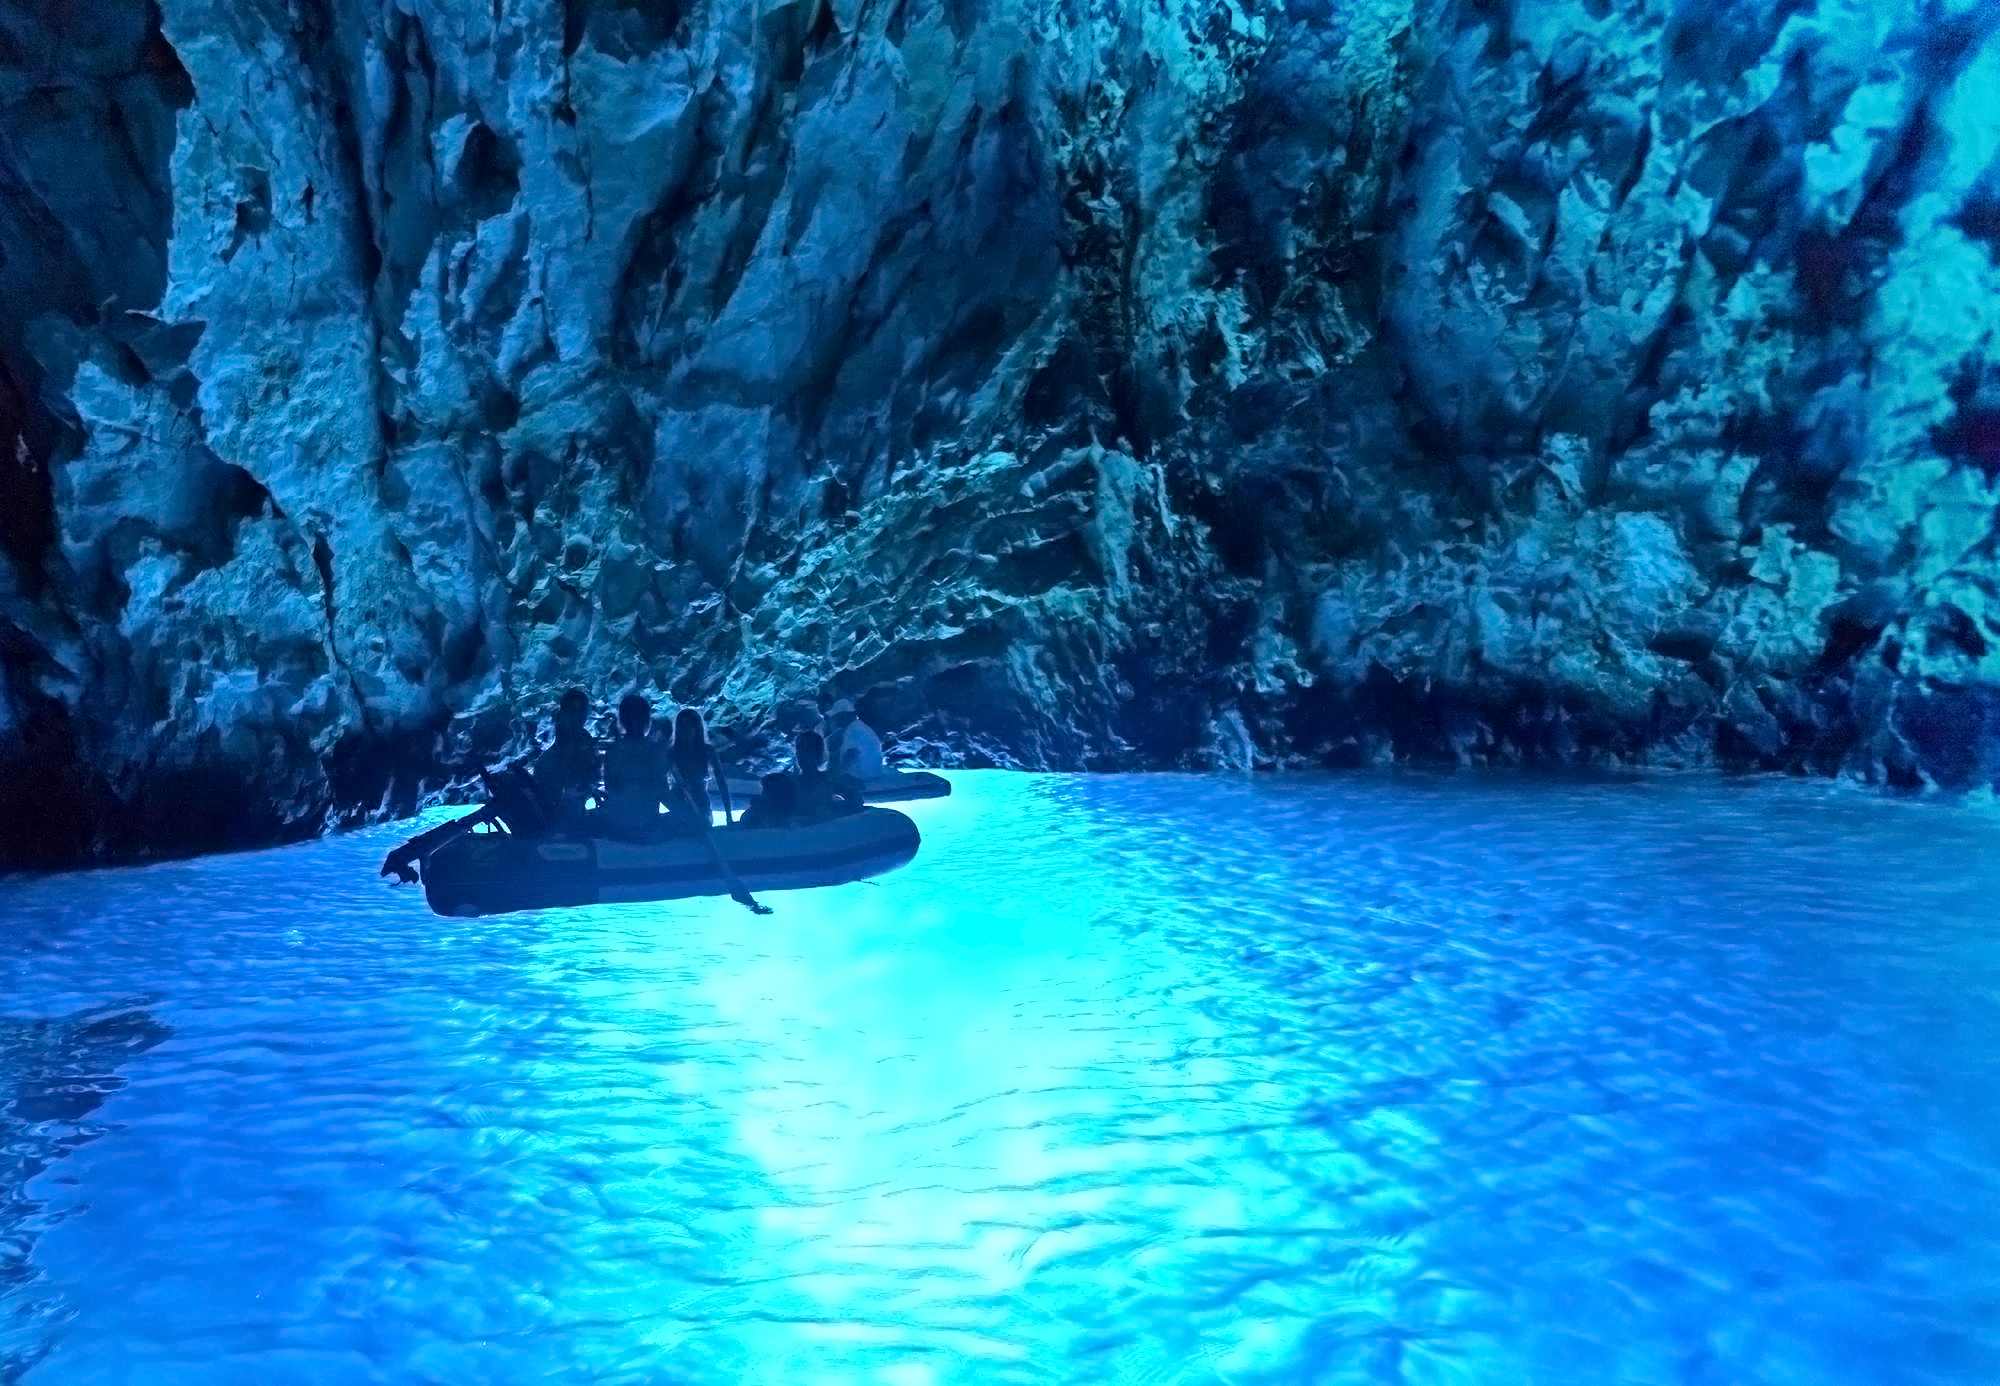 The Blue Grotto Cave In Croatia